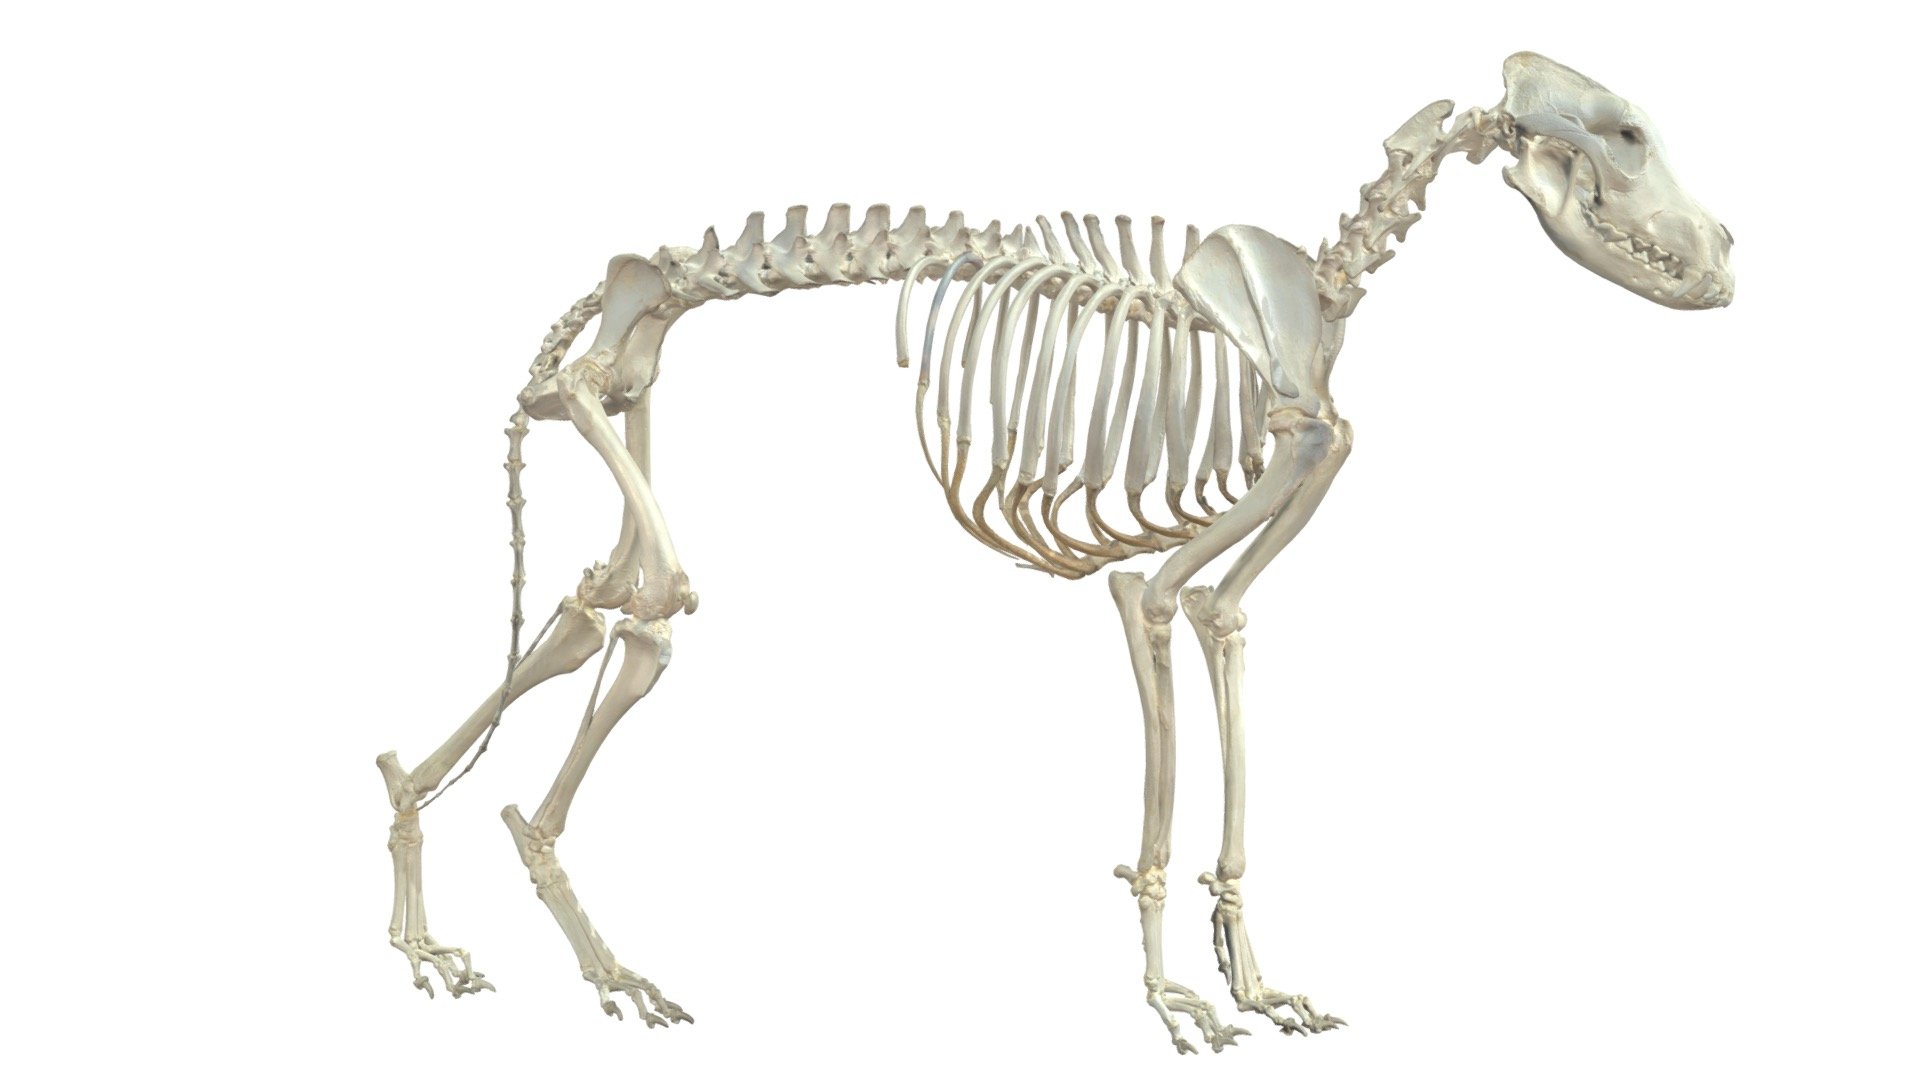 Skeleton Dog